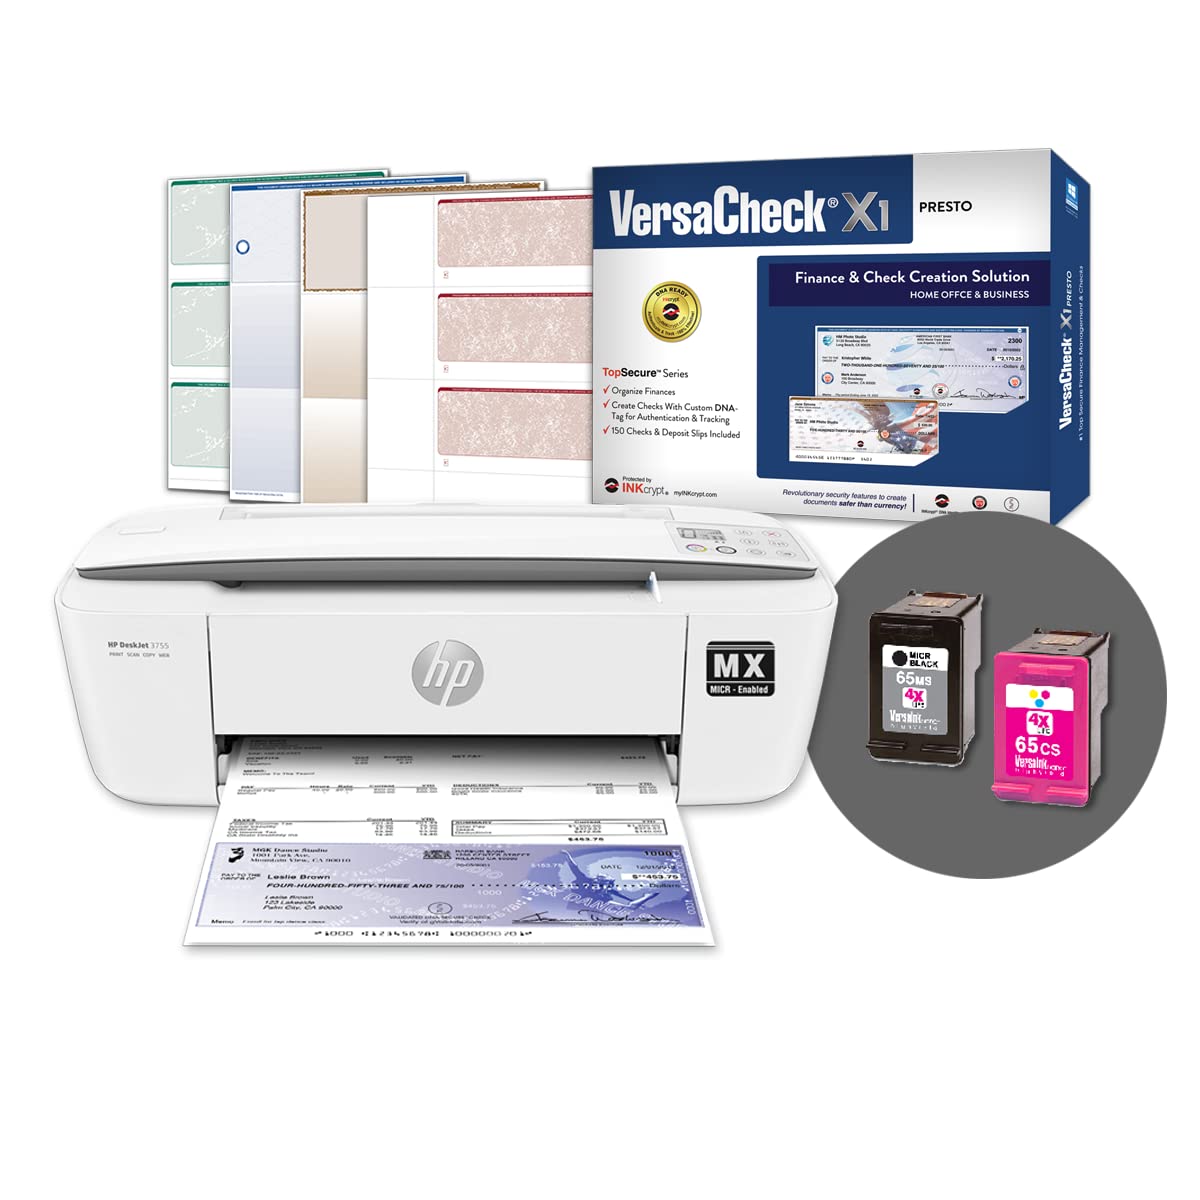 VersaCheck HP DeskJet 3755 MXE MICR Check Printer Presto Check Printing Software Bundle